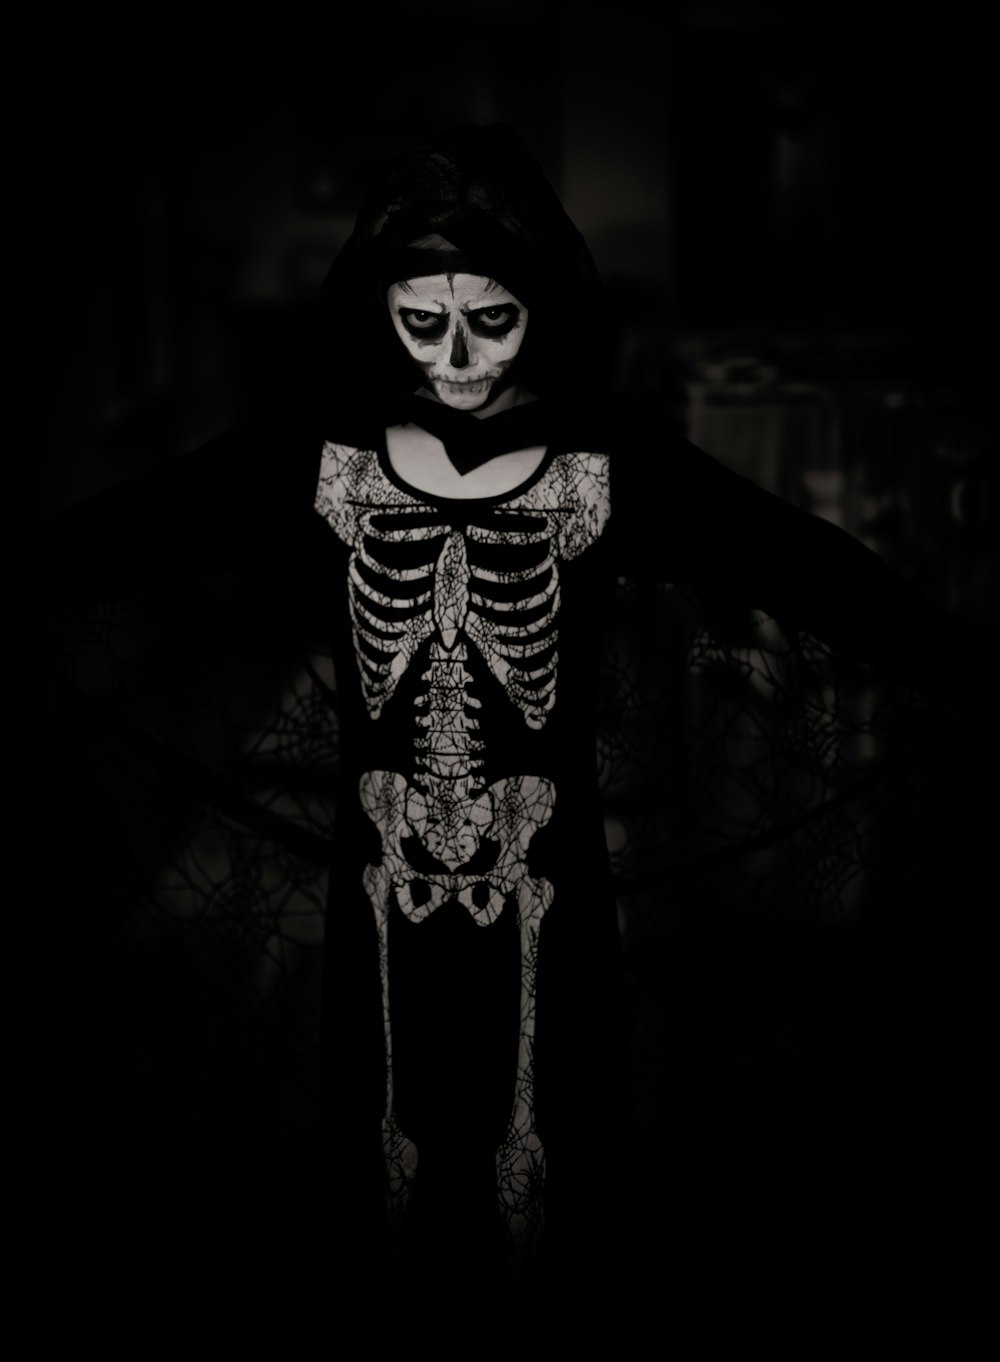 person wearing skeleton costume